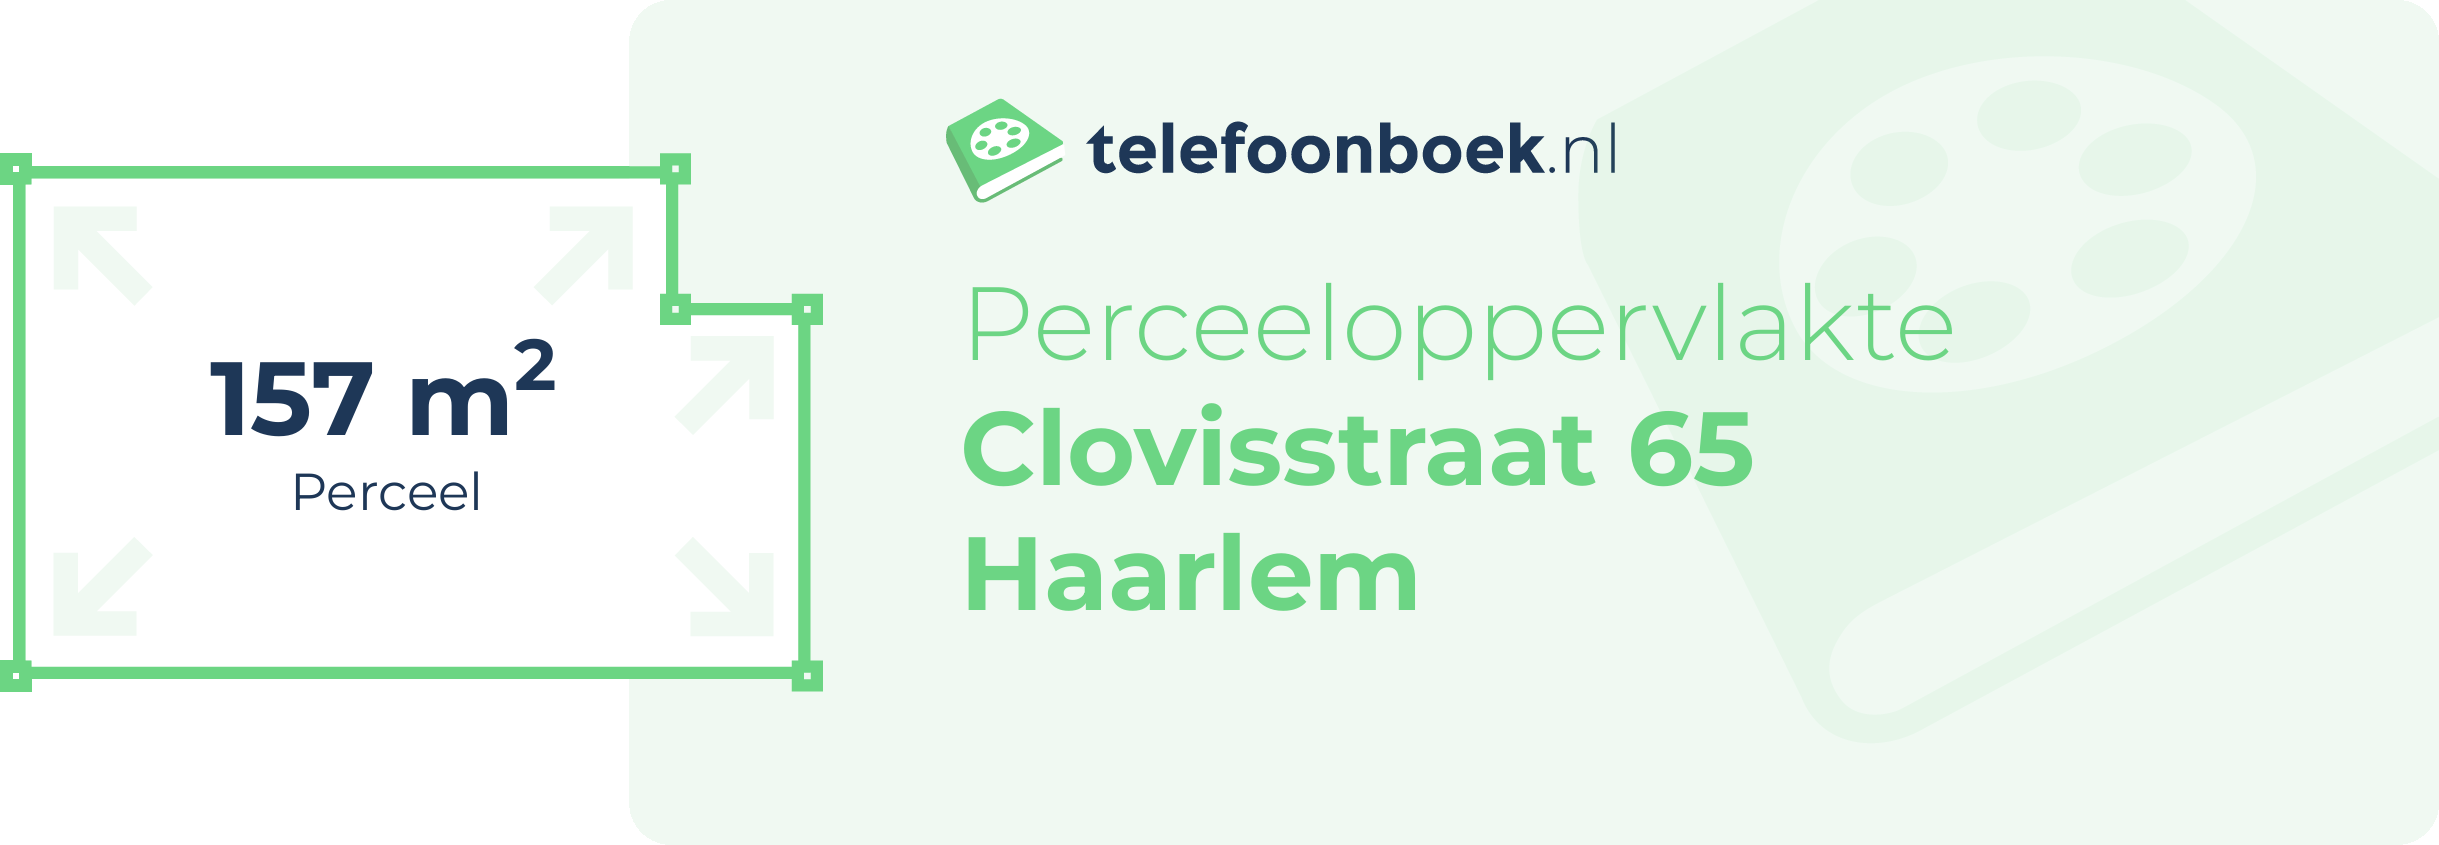 Perceeloppervlakte Clovisstraat 65 Haarlem